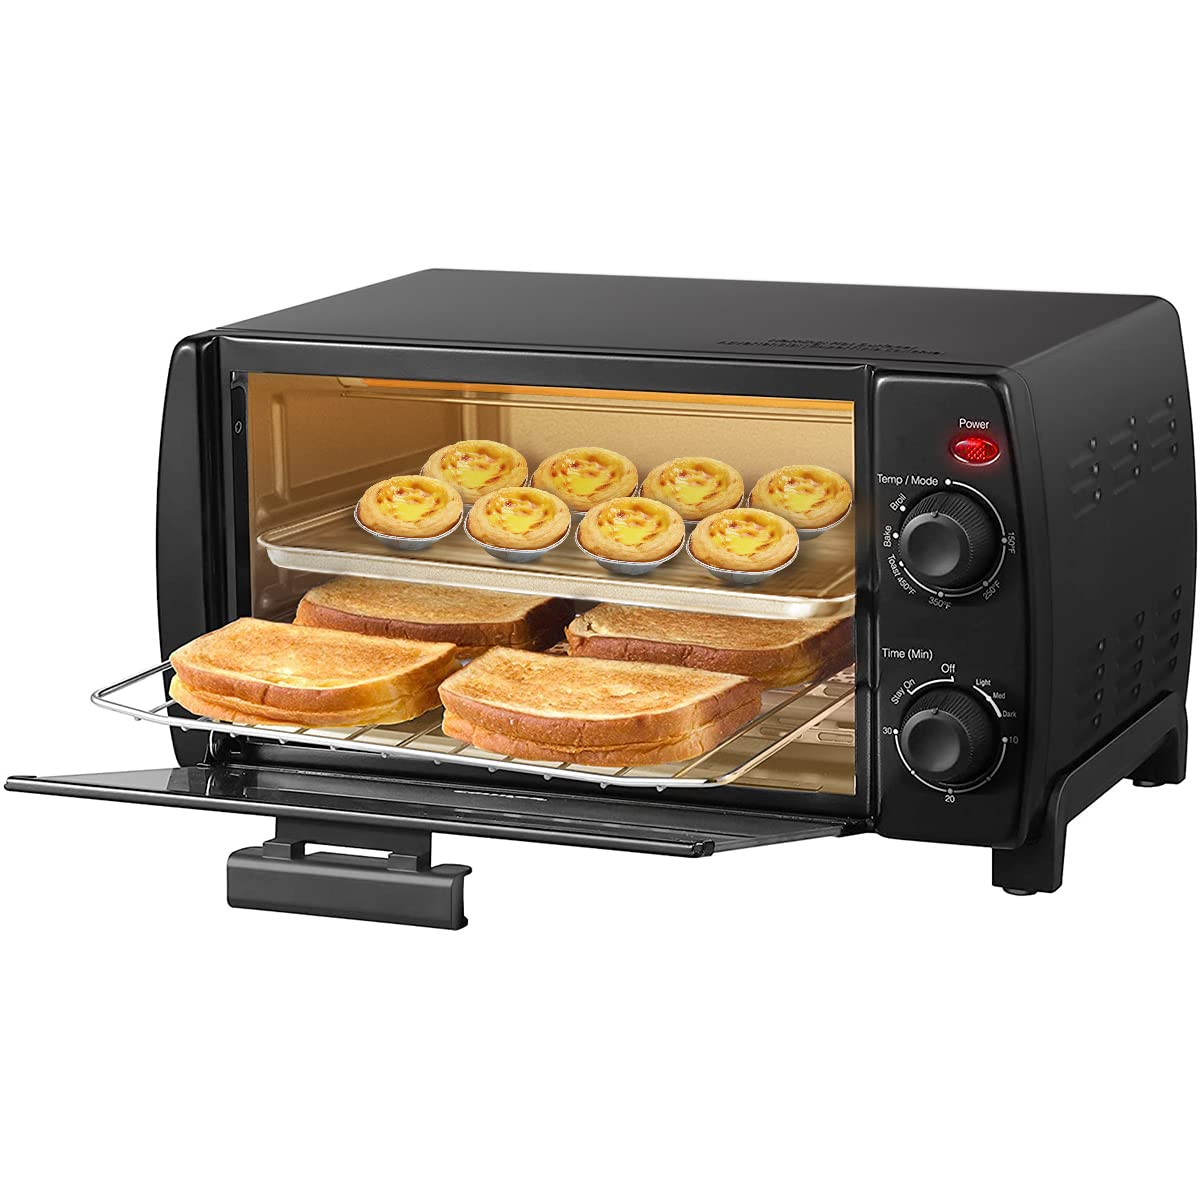 COMFEE' 4 Slice Small Toaster Oven Countertop